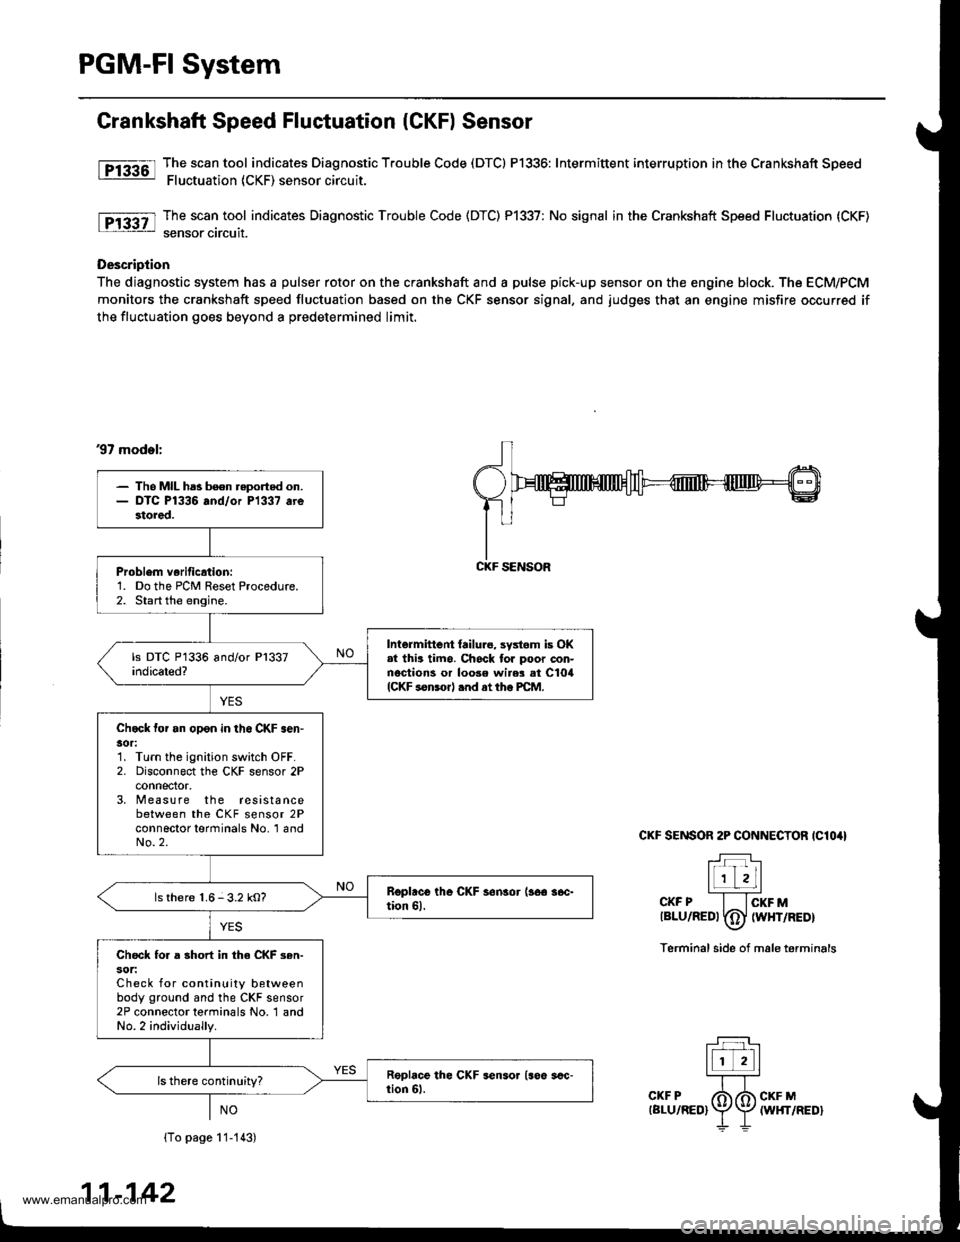 HONDA CR-V 1998 RD1-RD3 / 1.G Manual PDF 
PGM-FI System
Grankshaft Speed Fluctuation (CKF) Sensor
fF13361l Tj":""l.tool indicates Diagnostic Trouble Code (DTCI P1336: Intermittent interruption inthe Crankshaft Speed: Fluctuation (CKF) sensor